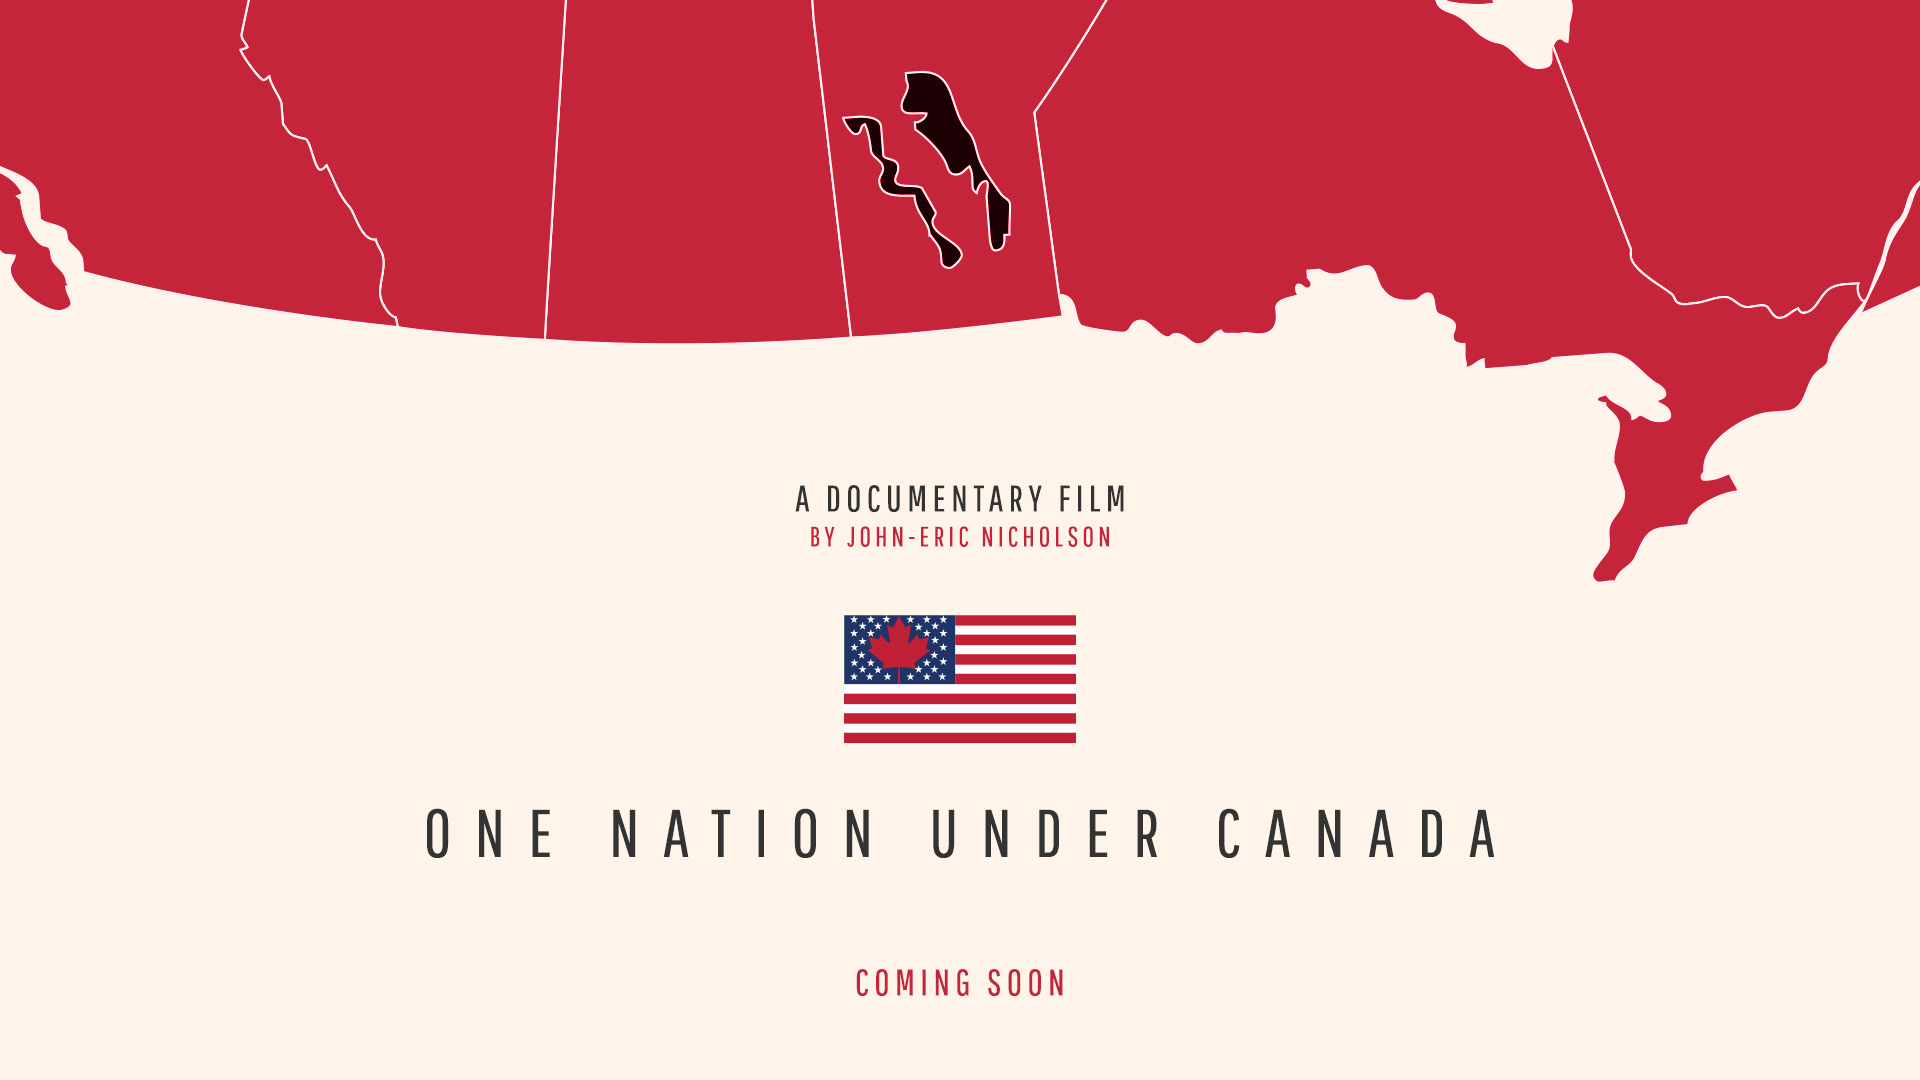 One Nation Under Canada - Documentary Film by Canadian Director John-Eric Nicholson